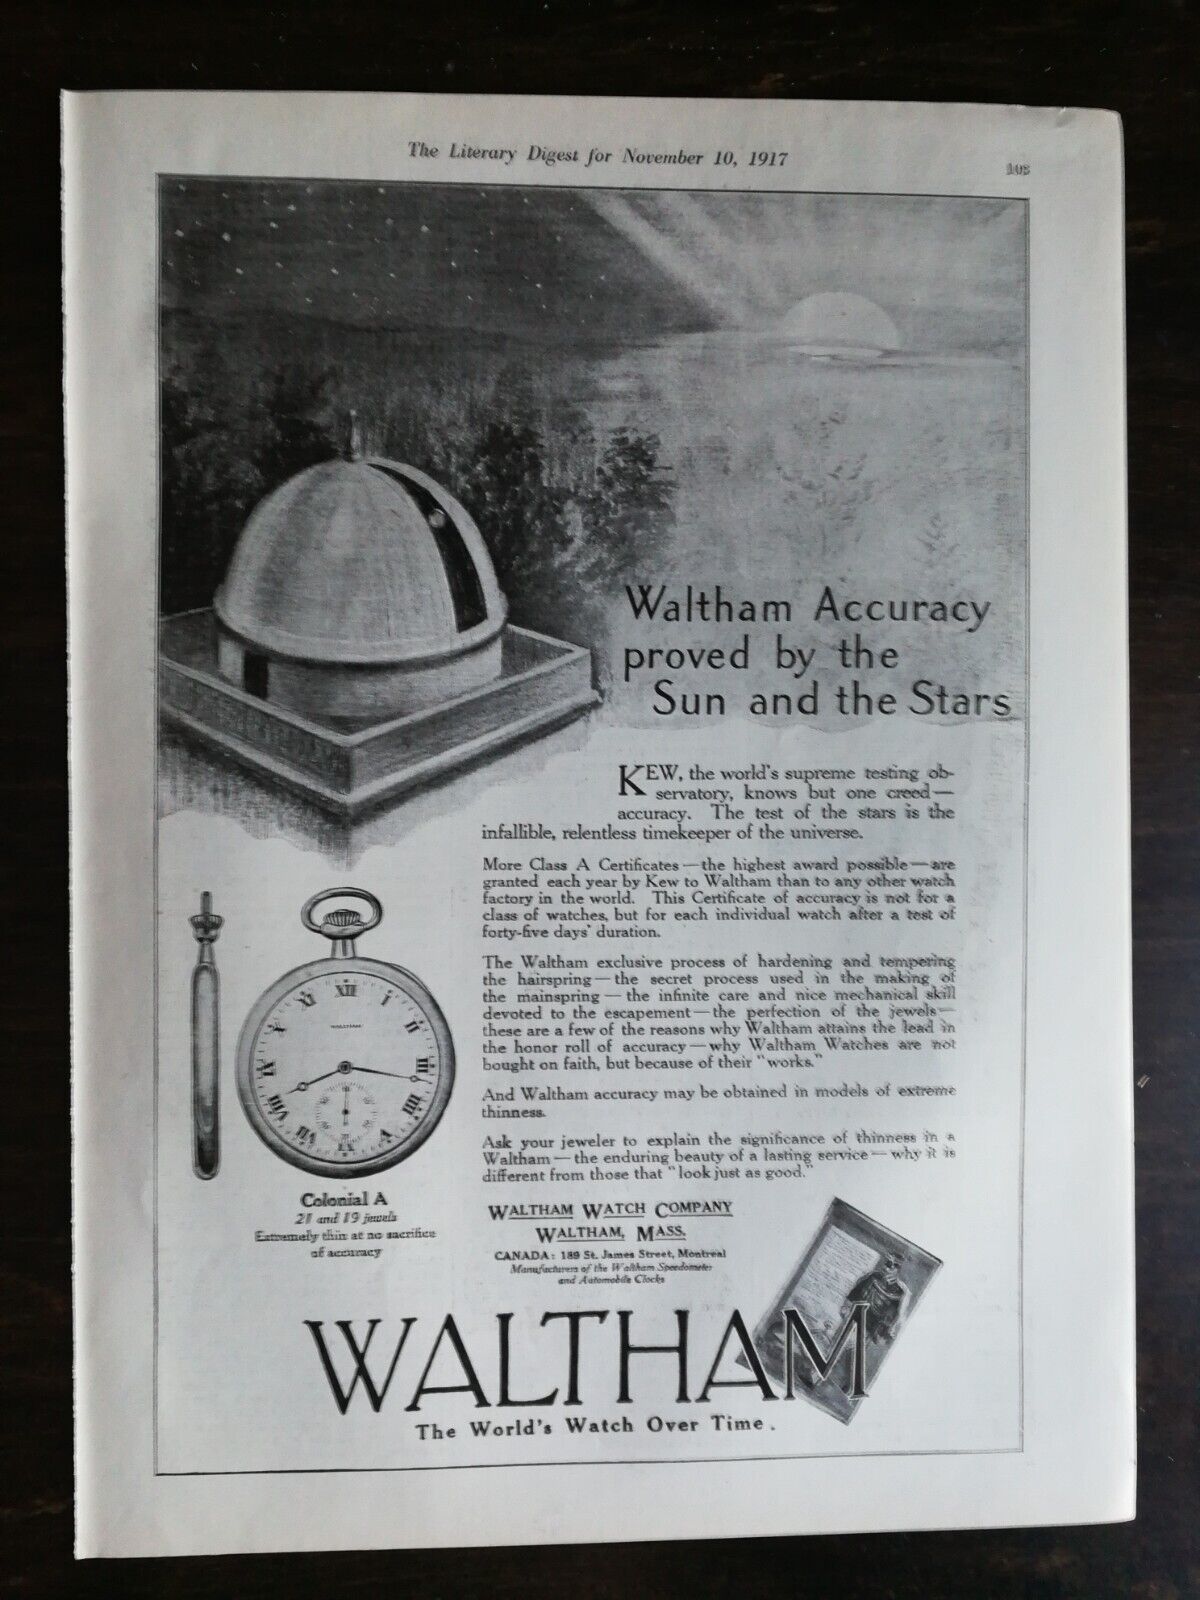 Vintage 1917 Waltham Colonial A Pocket Watch Full Page Original Ad 222